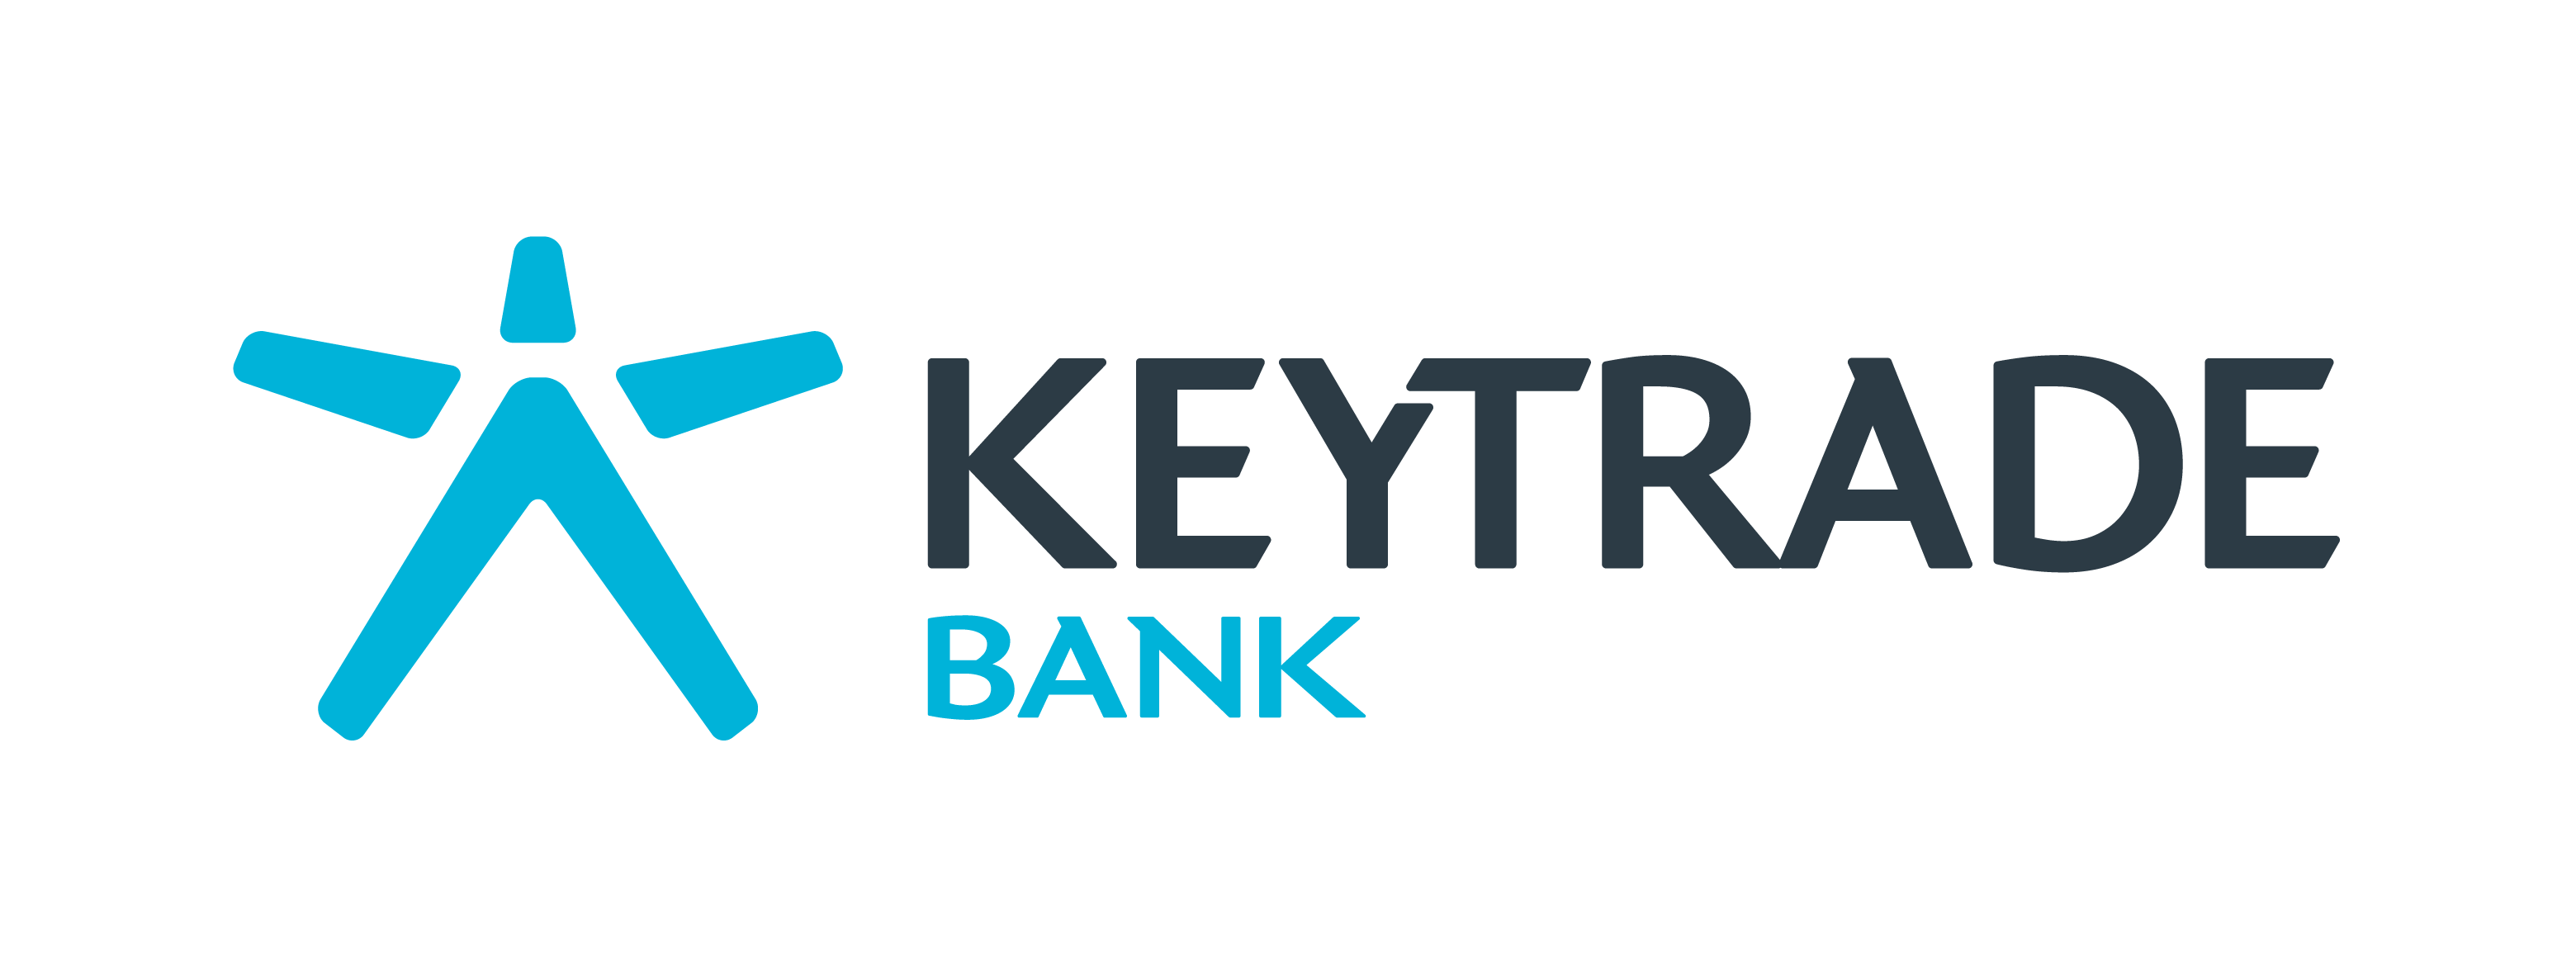 Keytrade Bank logo